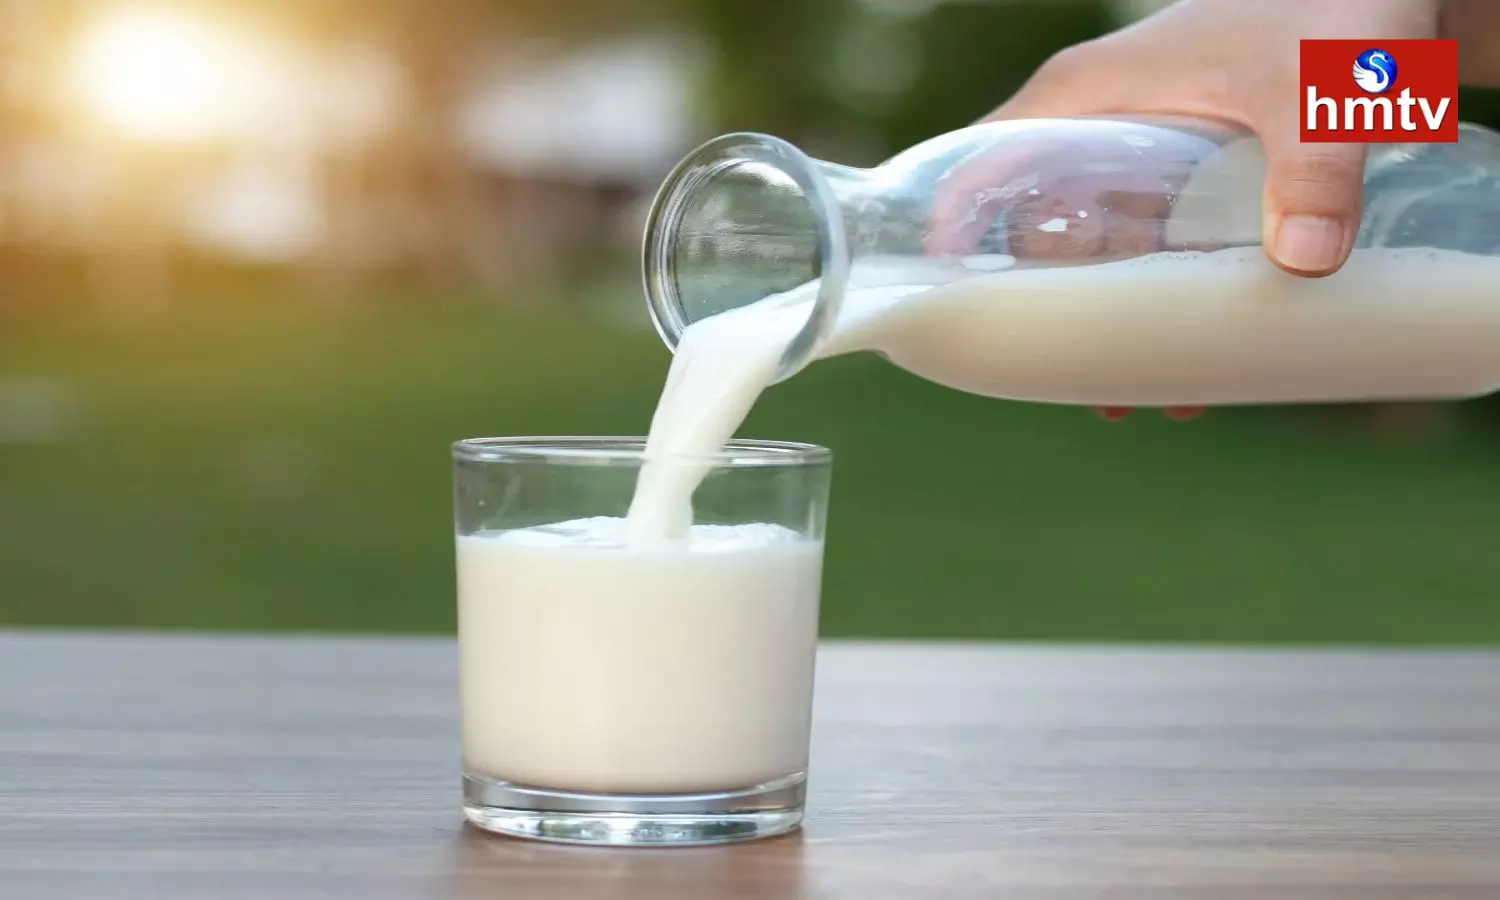 Ghee mixed with hot milk has amazing benefits